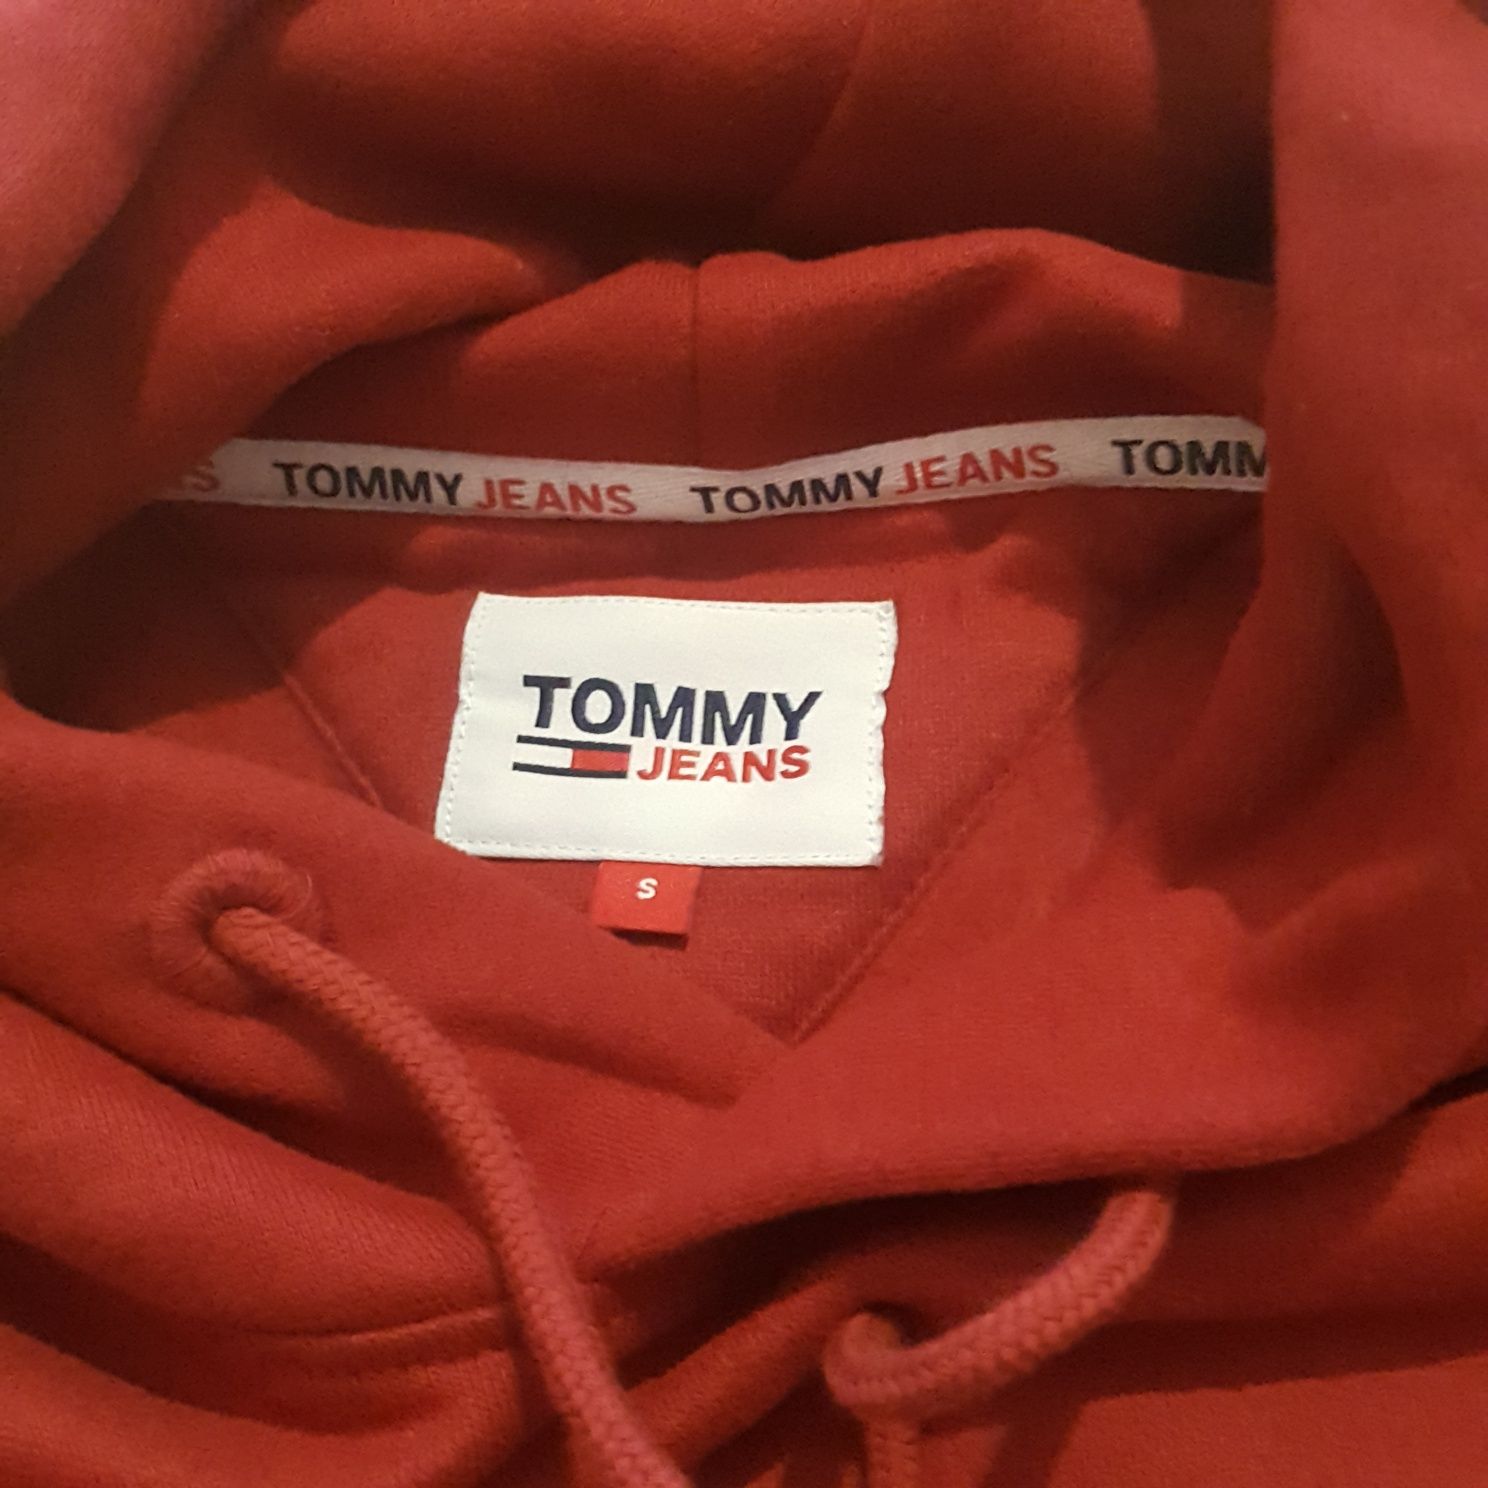 Hoodie sweat Tommy Jeans - Tam S-  como nova - Ermesinde